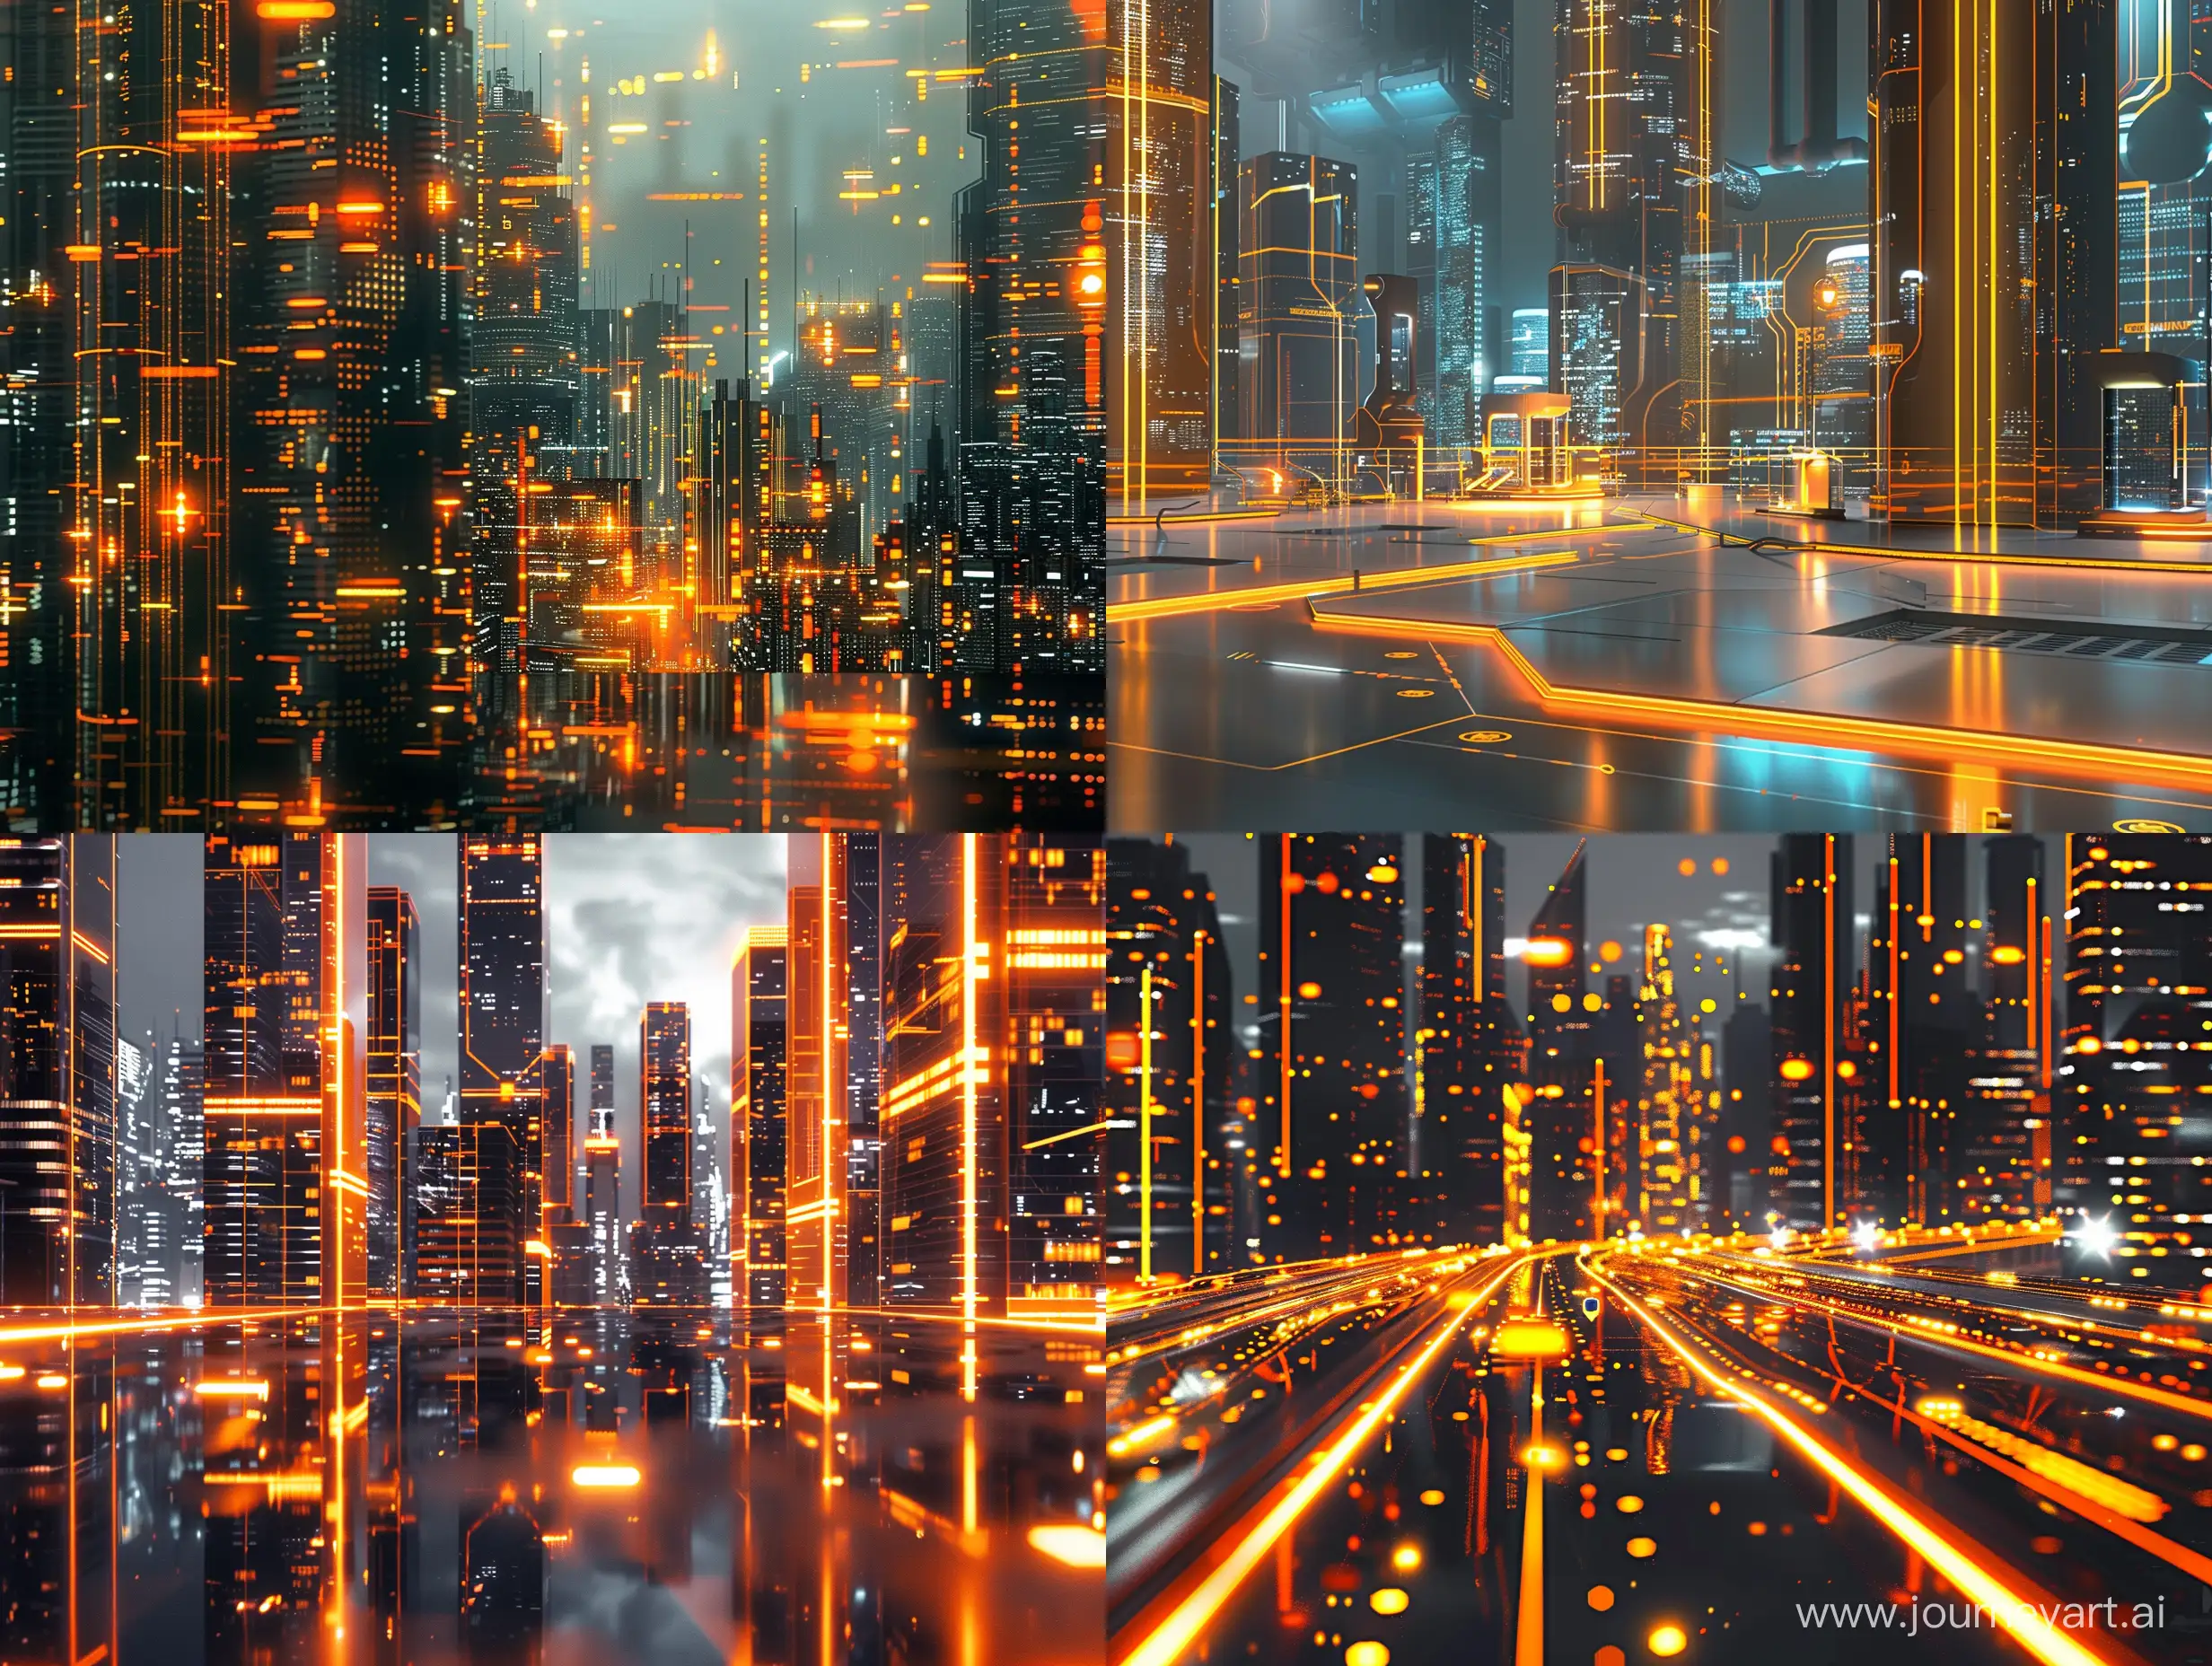 Sleek-Cyberpunk-Cityscape-Futuristic-Nighttime-Urban-Setting-with-Orange-and-Gold-Glow